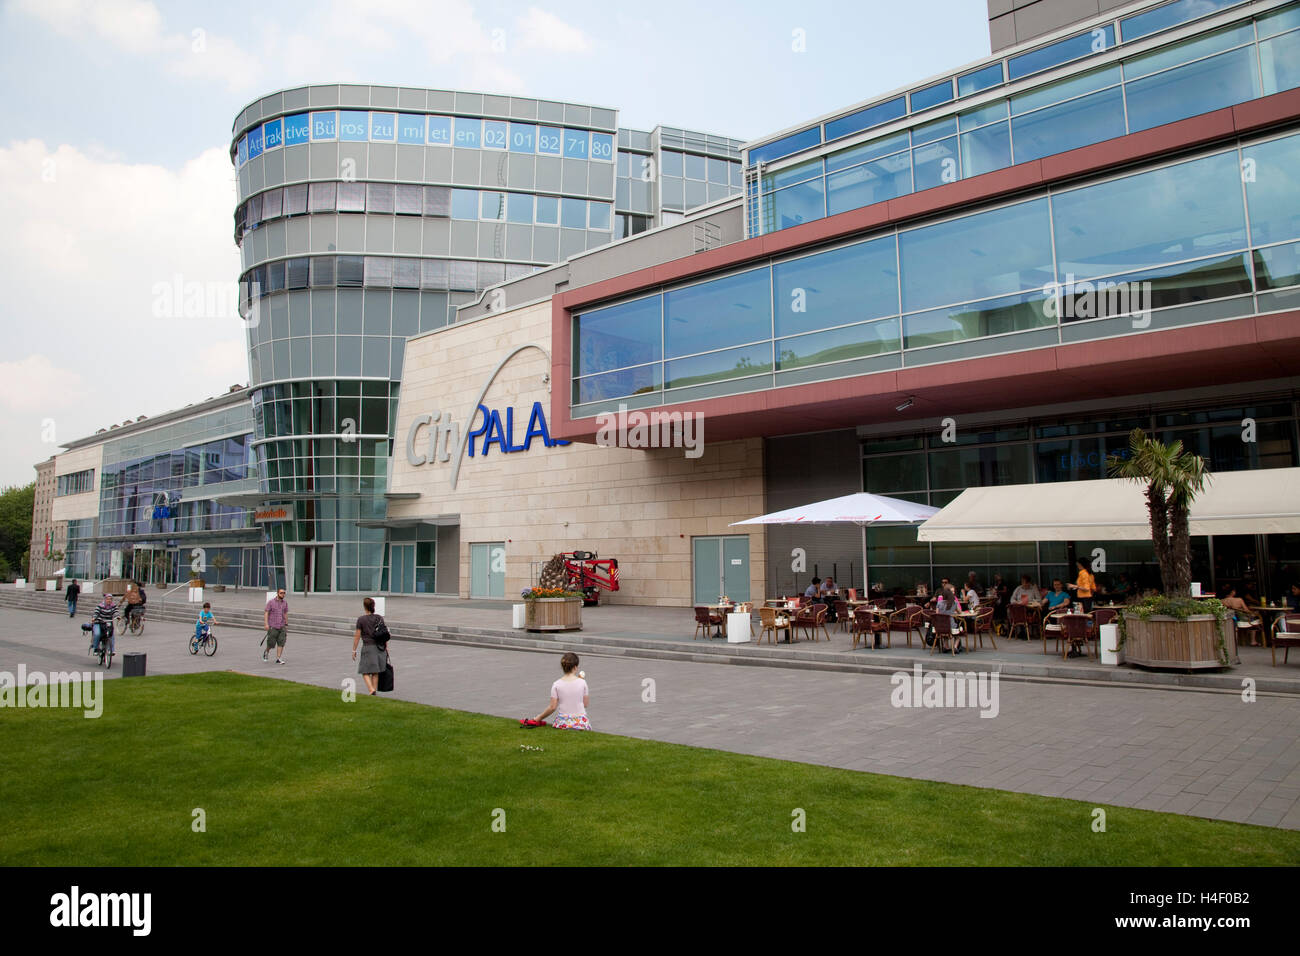 Mercatorhalle venue and concert hall, City Palace, Duisburg, Ruhrgebiet region, North Rhine-Westphalia Stock Photo